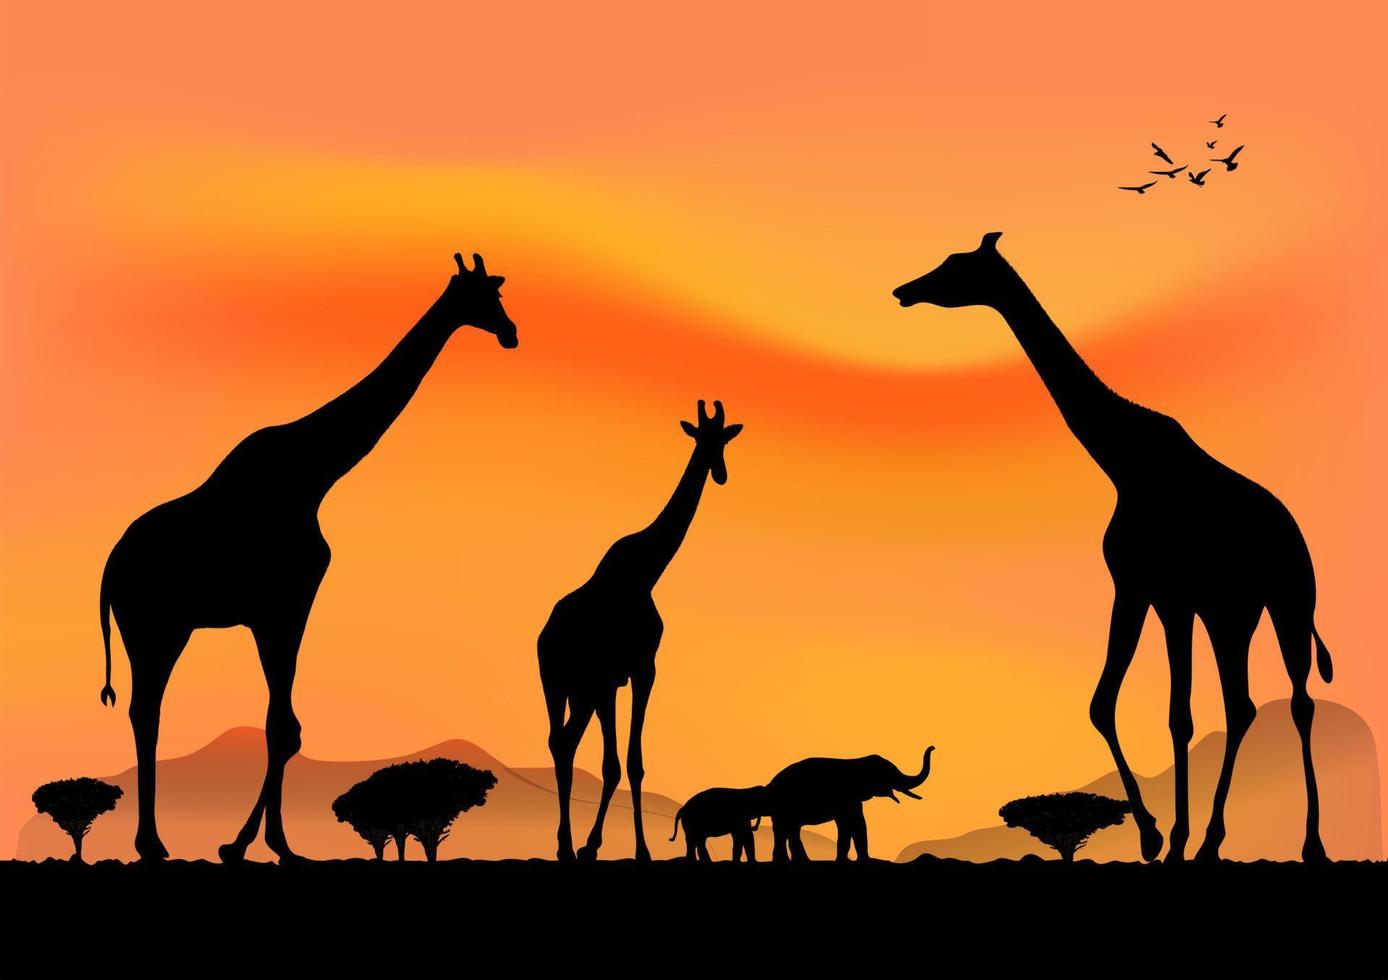 grafik landskapsvy giraff i skogen med bergsbakgrund och twilight silhouette vektorillustration vektor